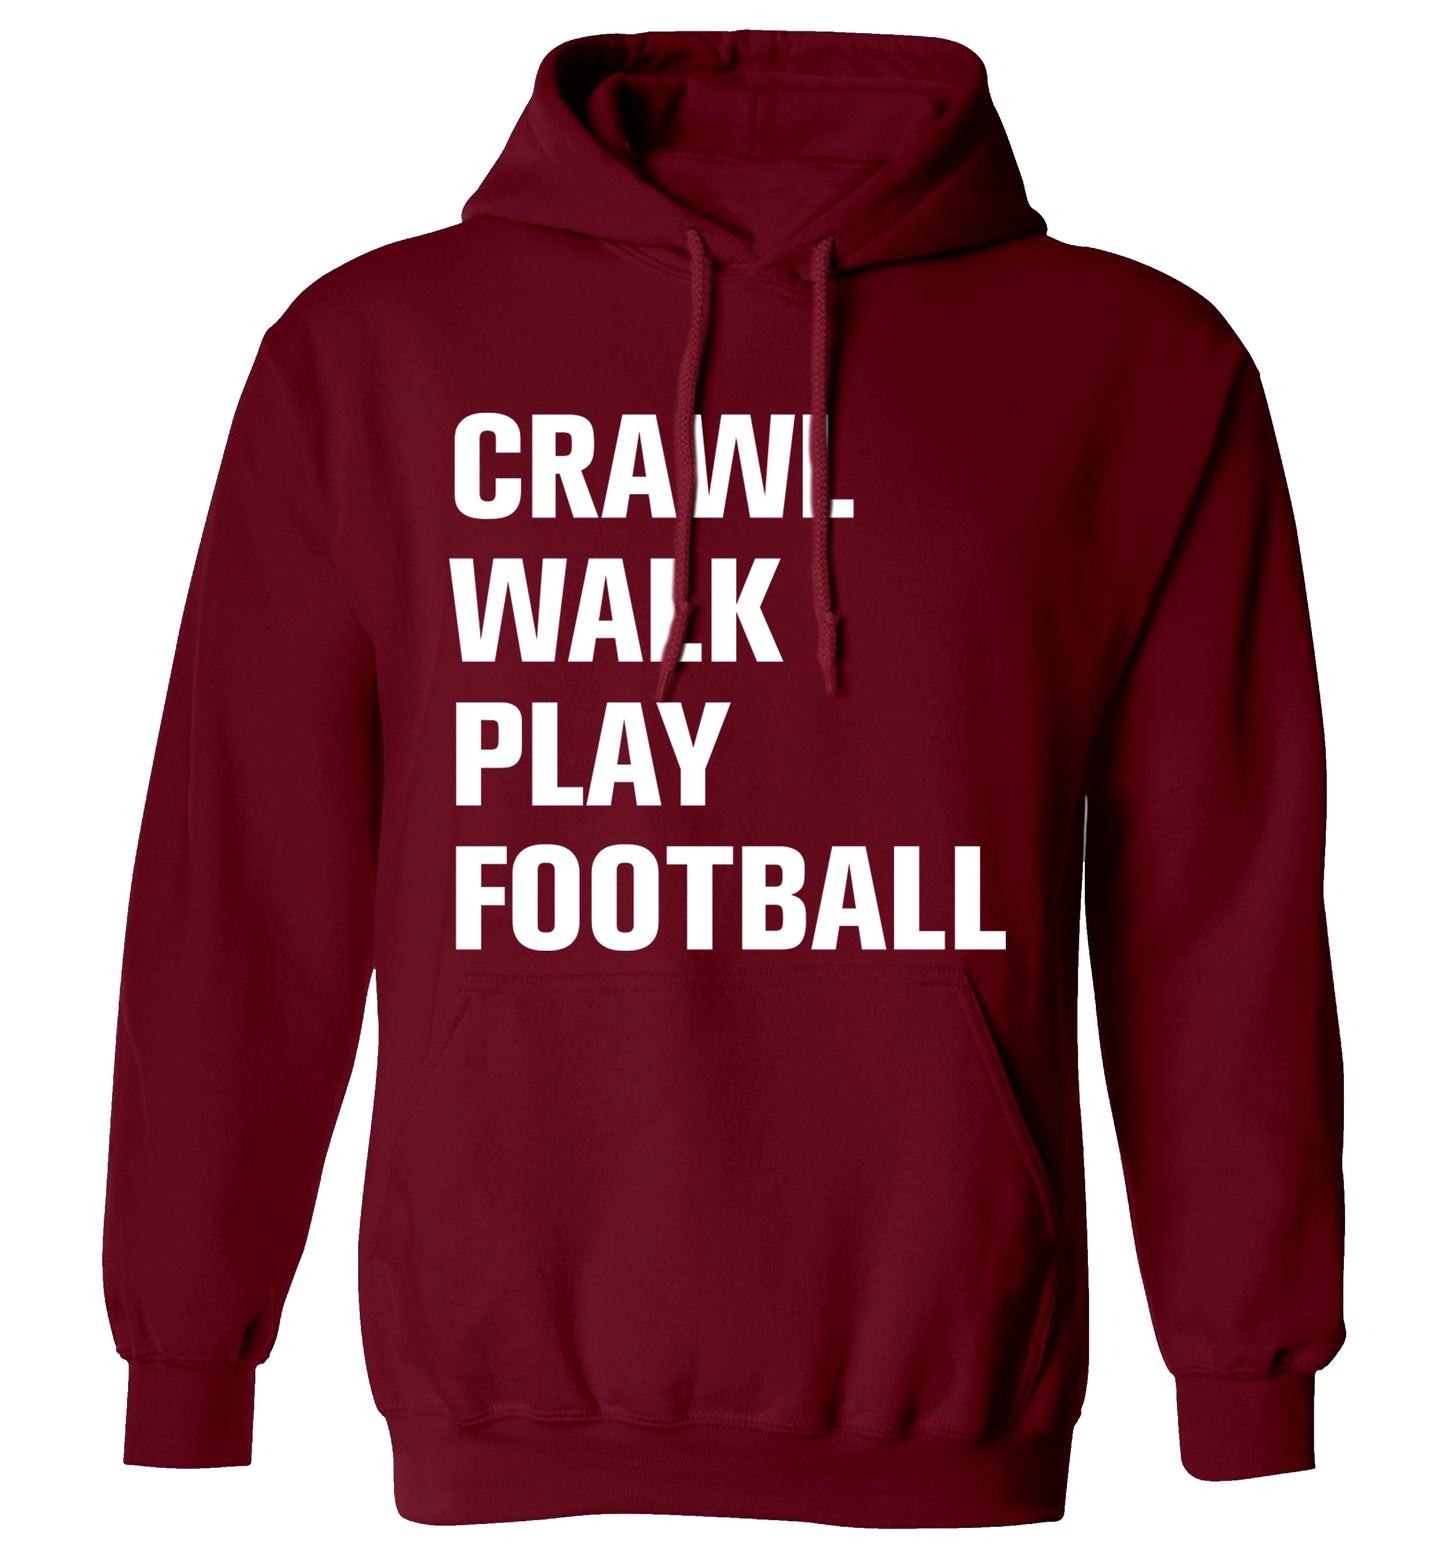 Crawl, walk, play football adults unisex maroon hoodie 2XL